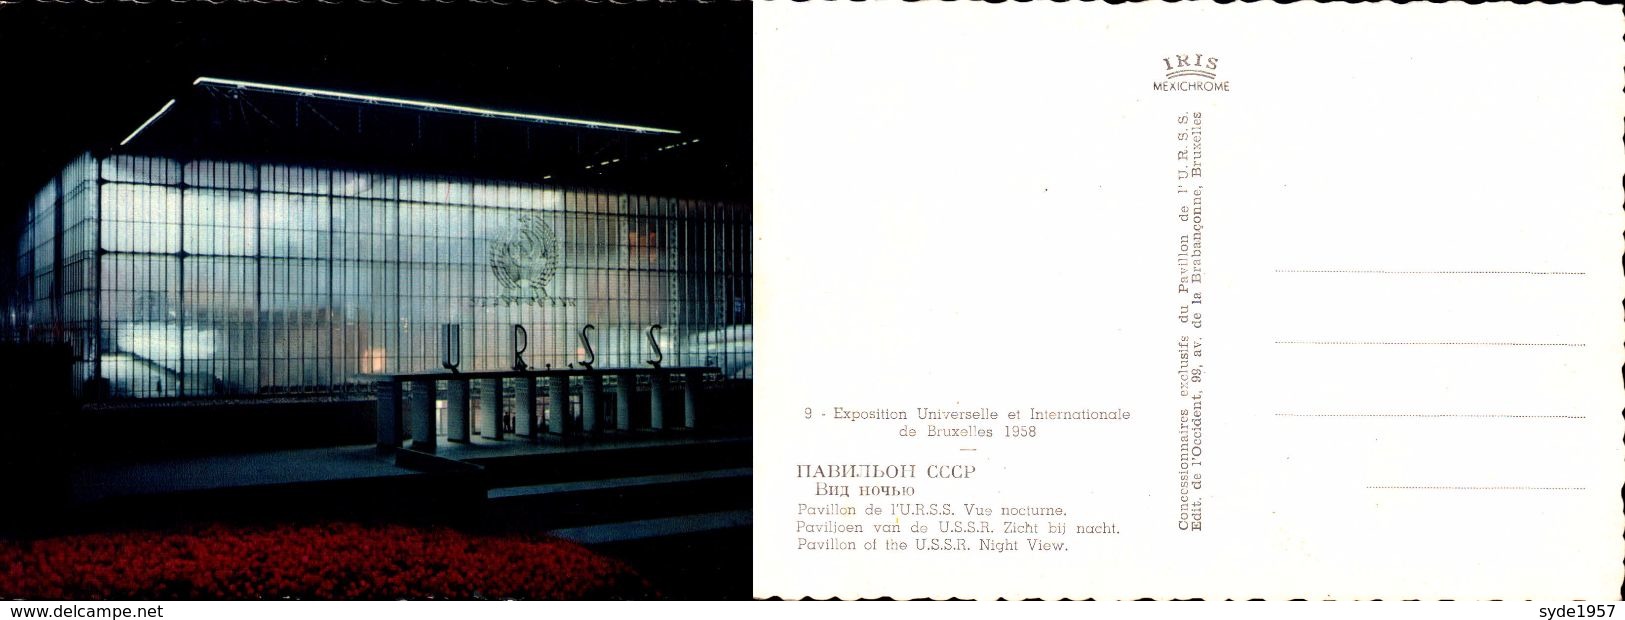 EXPO Universelle 1958 - Pavillon URSS Vue Nocturne - Europese Instellingen